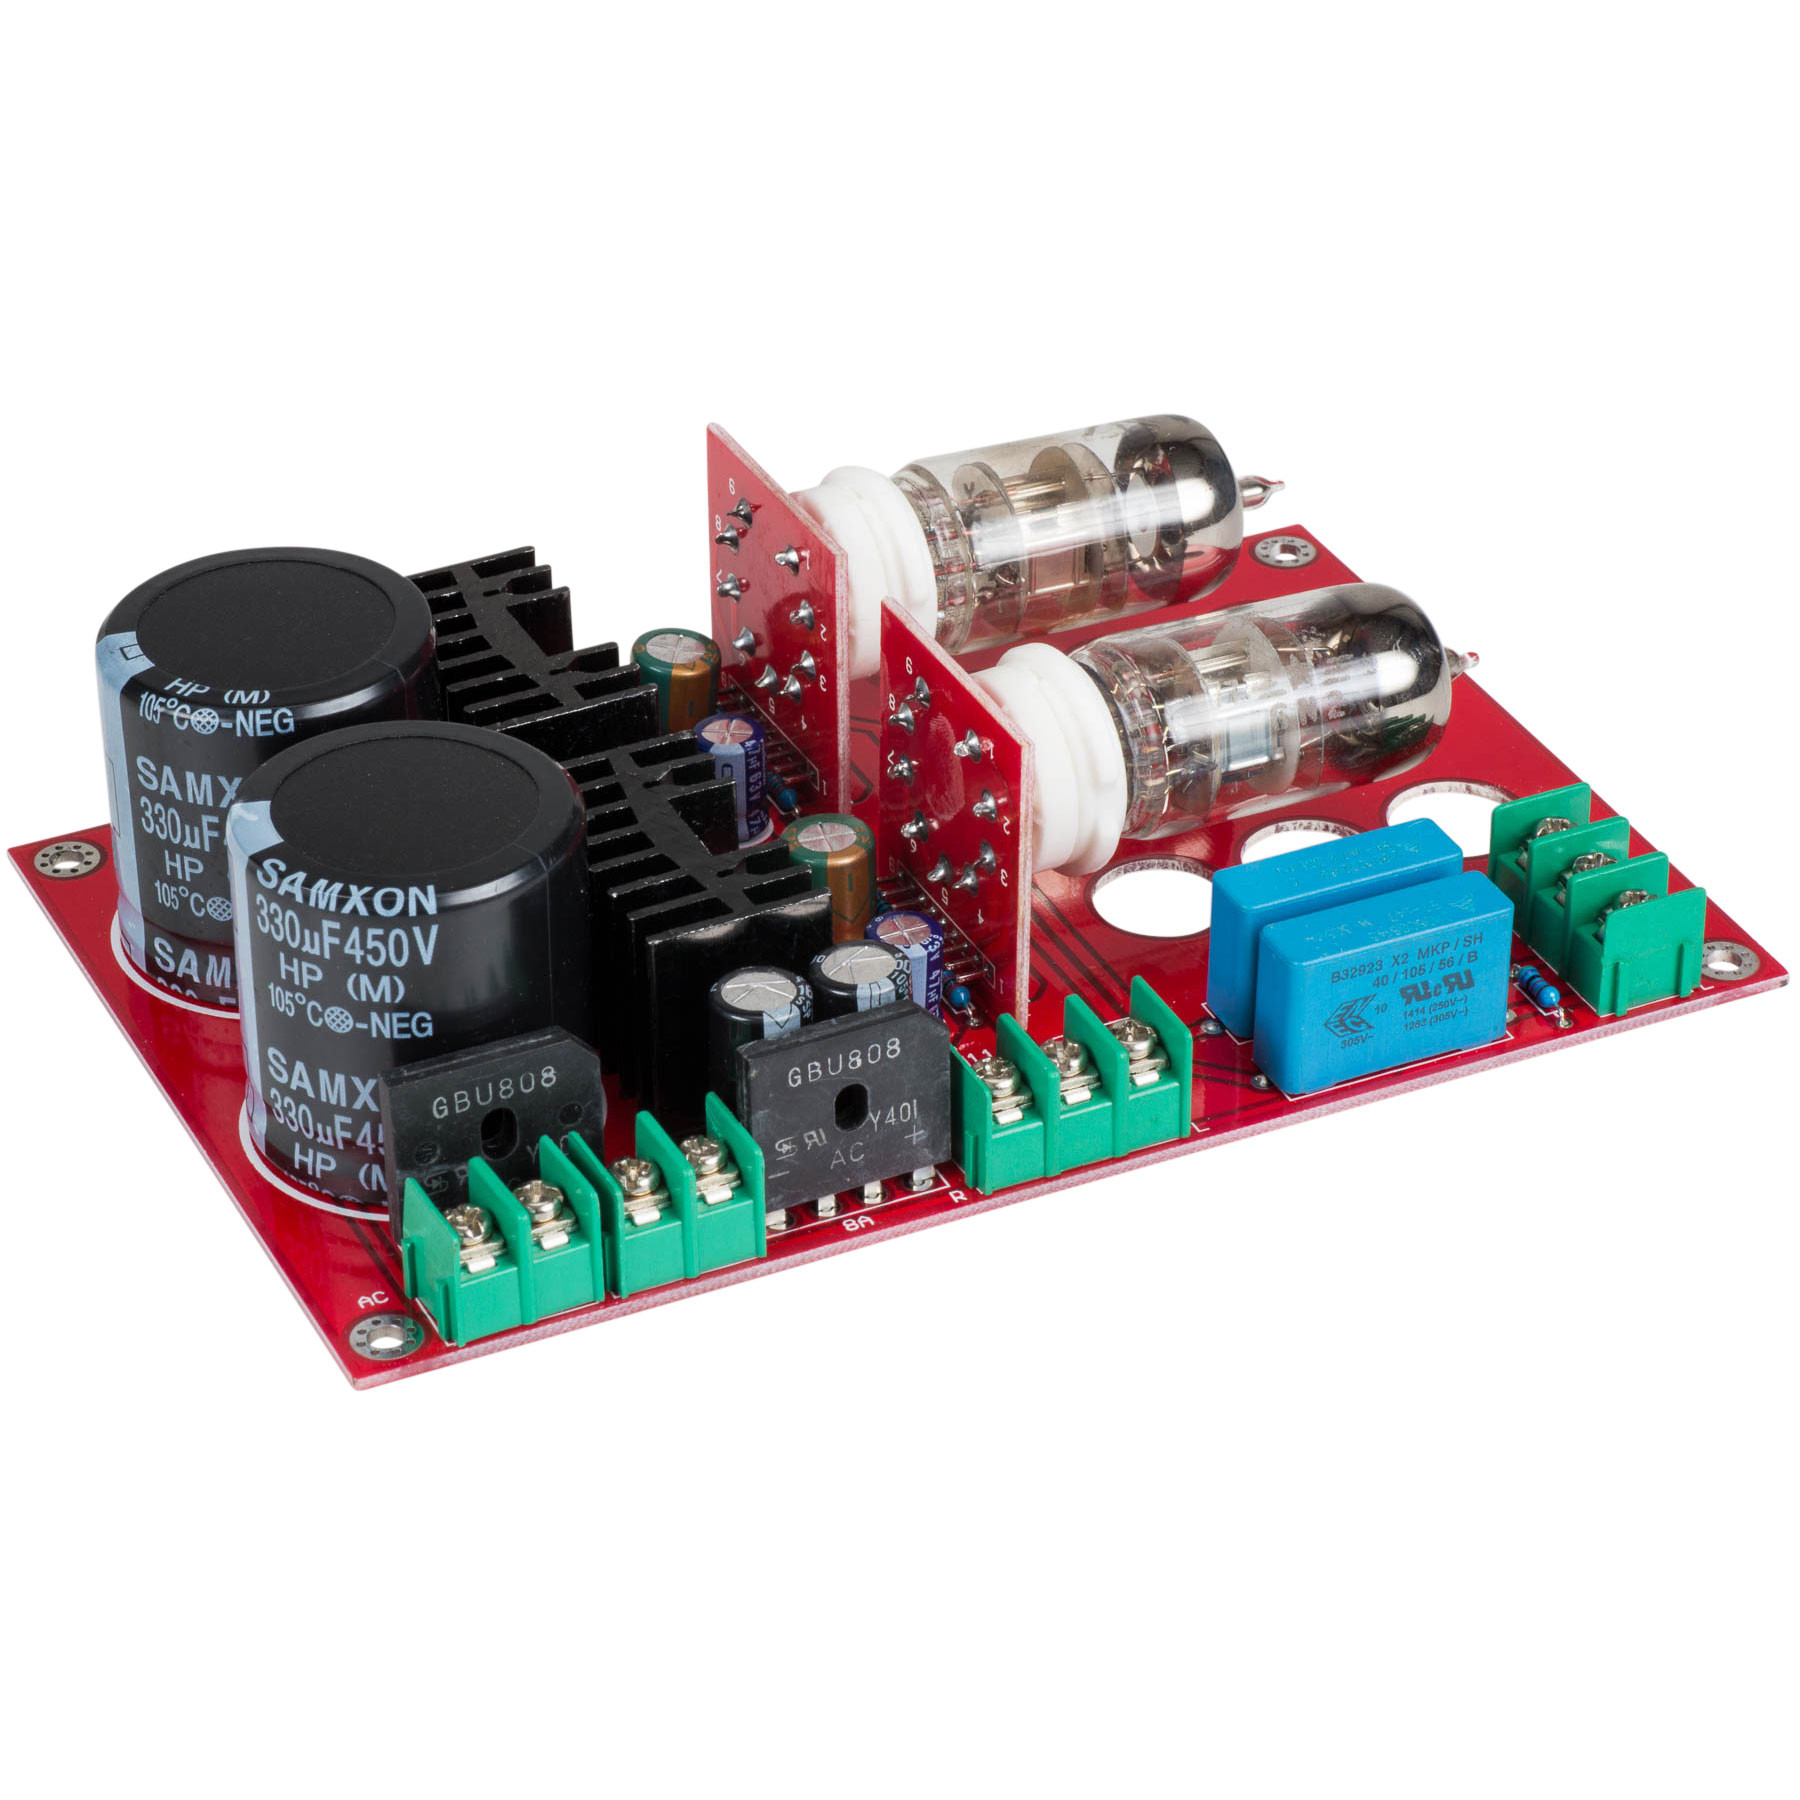 DIY Stereo Tube Amp Kits
 Yuan Jing Pre and Tube Amplifier Kit 6N2 SRPP for DIY